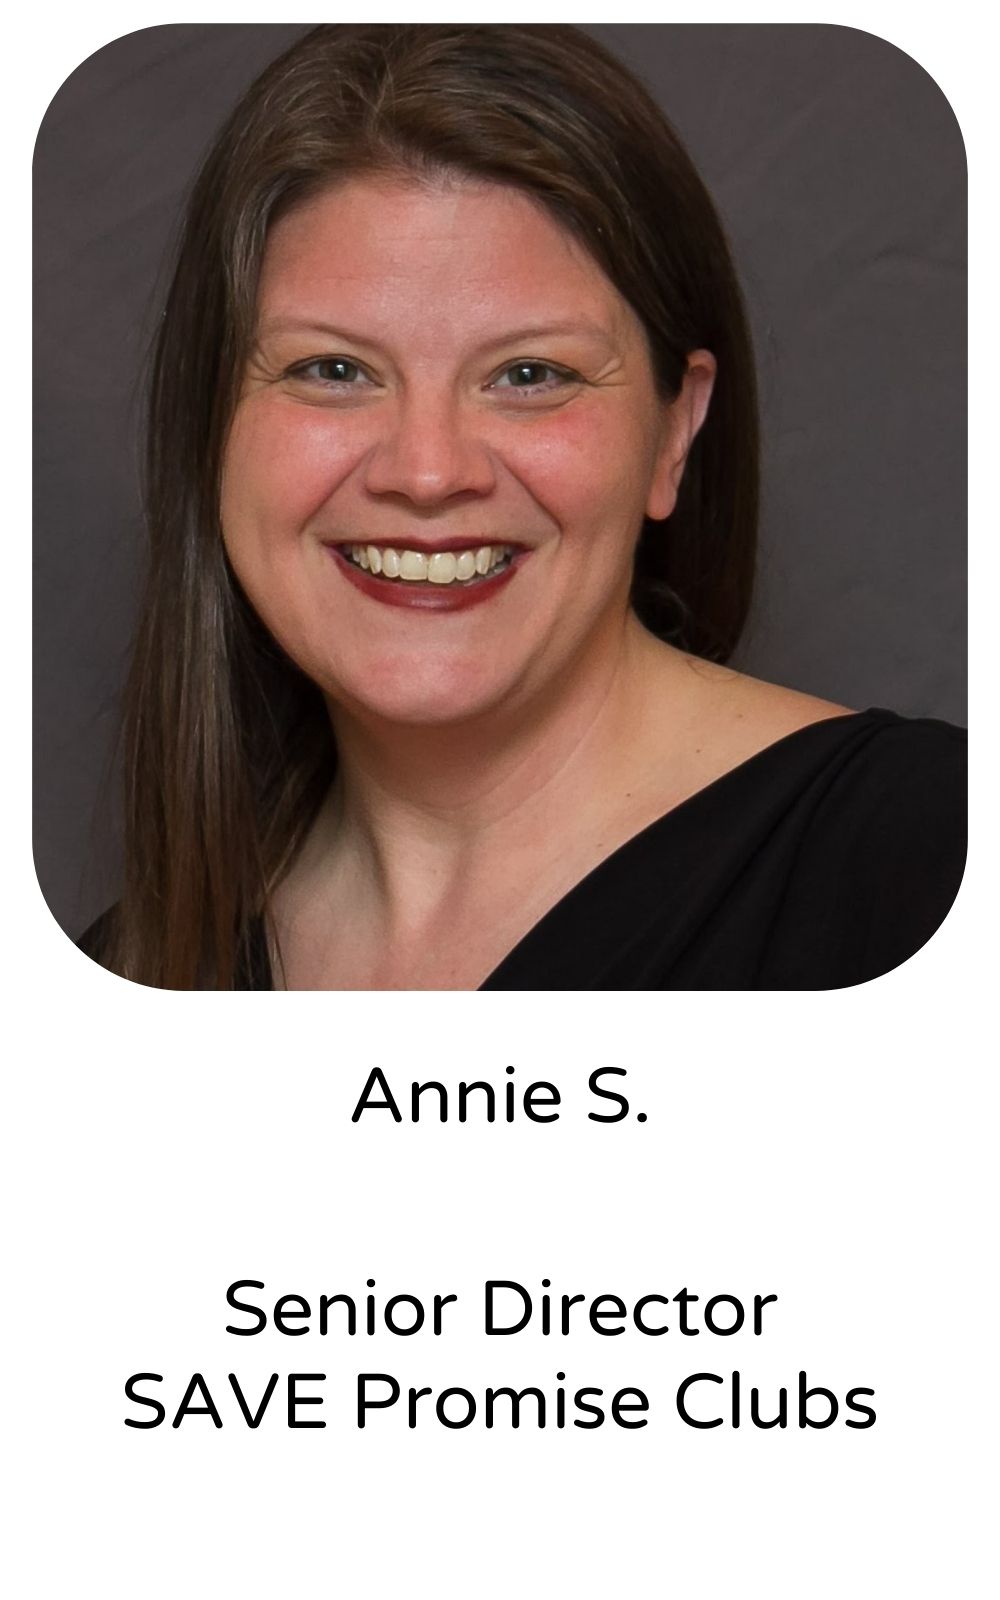 Annie S, Senior Director, SAVE Promise Clubs